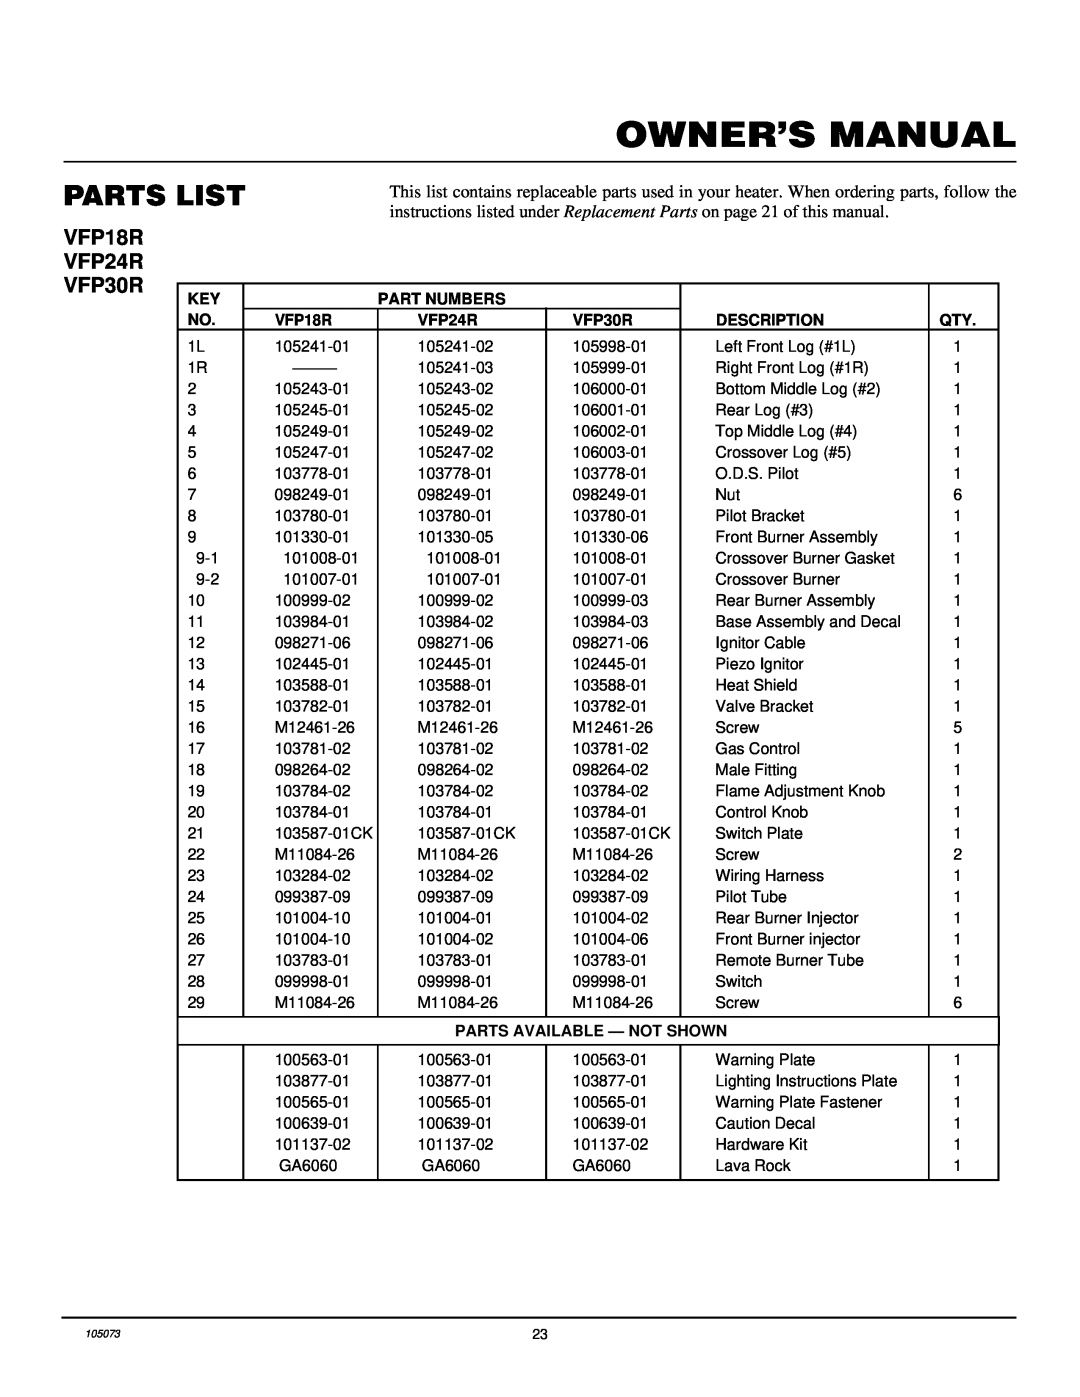 FMI VFP18R installation manual Parts List, Part Numbers, VFP24R, VFP30R, Description, Parts Available - Not Shown 